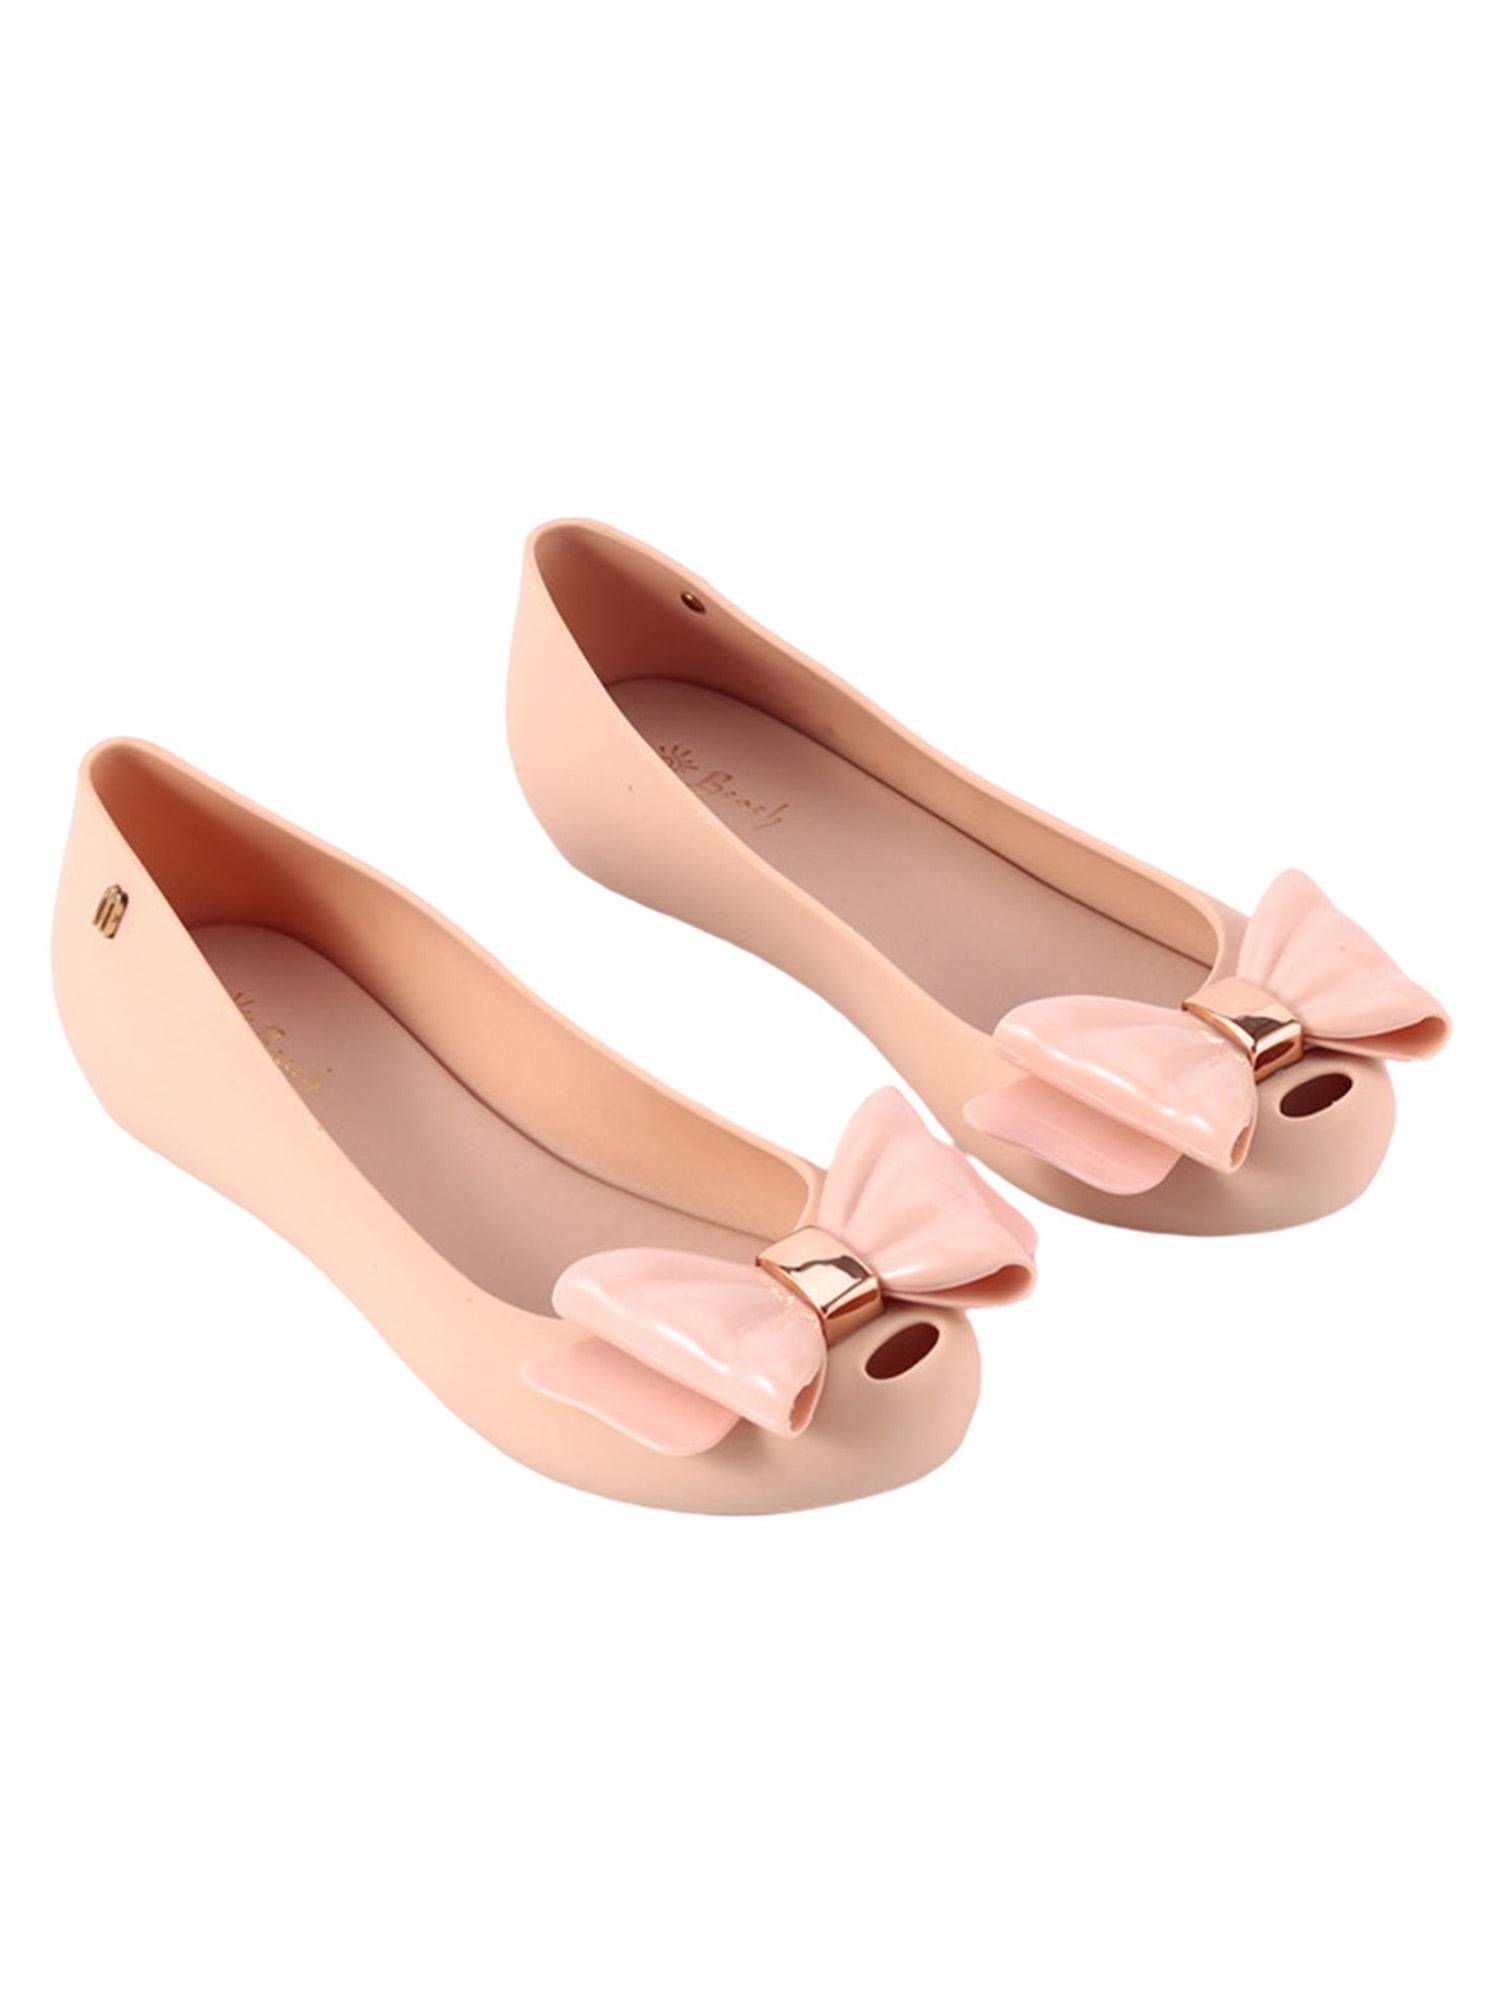 UK Ladies Ballerina Ballet Dolly Pumps Bow Glitter Shoes Size Girls Flats School 